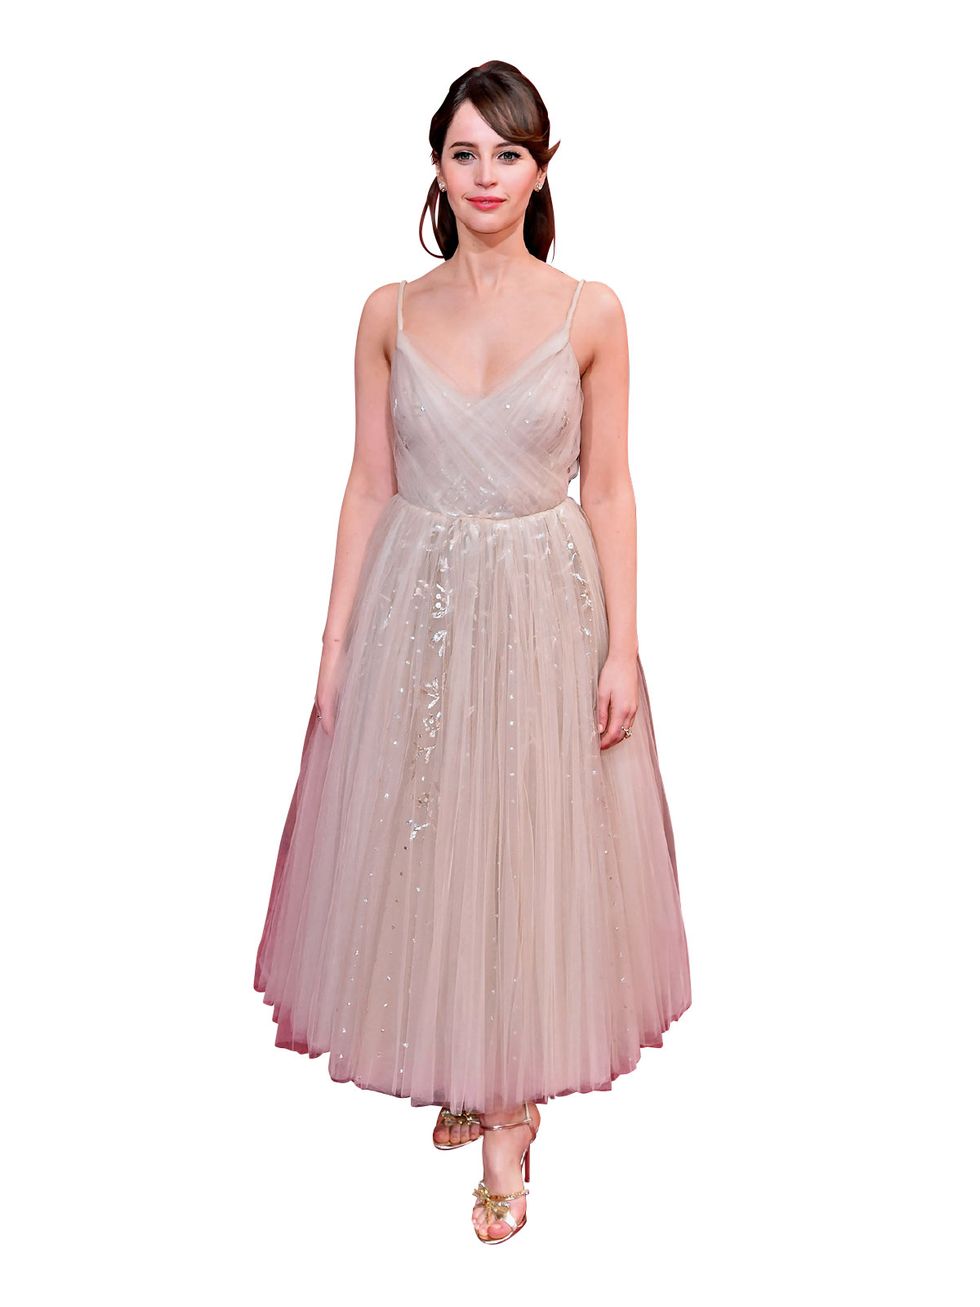 Clothing, Dress, Cocktail dress, Pink, Shoulder, Gown, A-line, Bridal party dress, Fashion model, Day dress, 